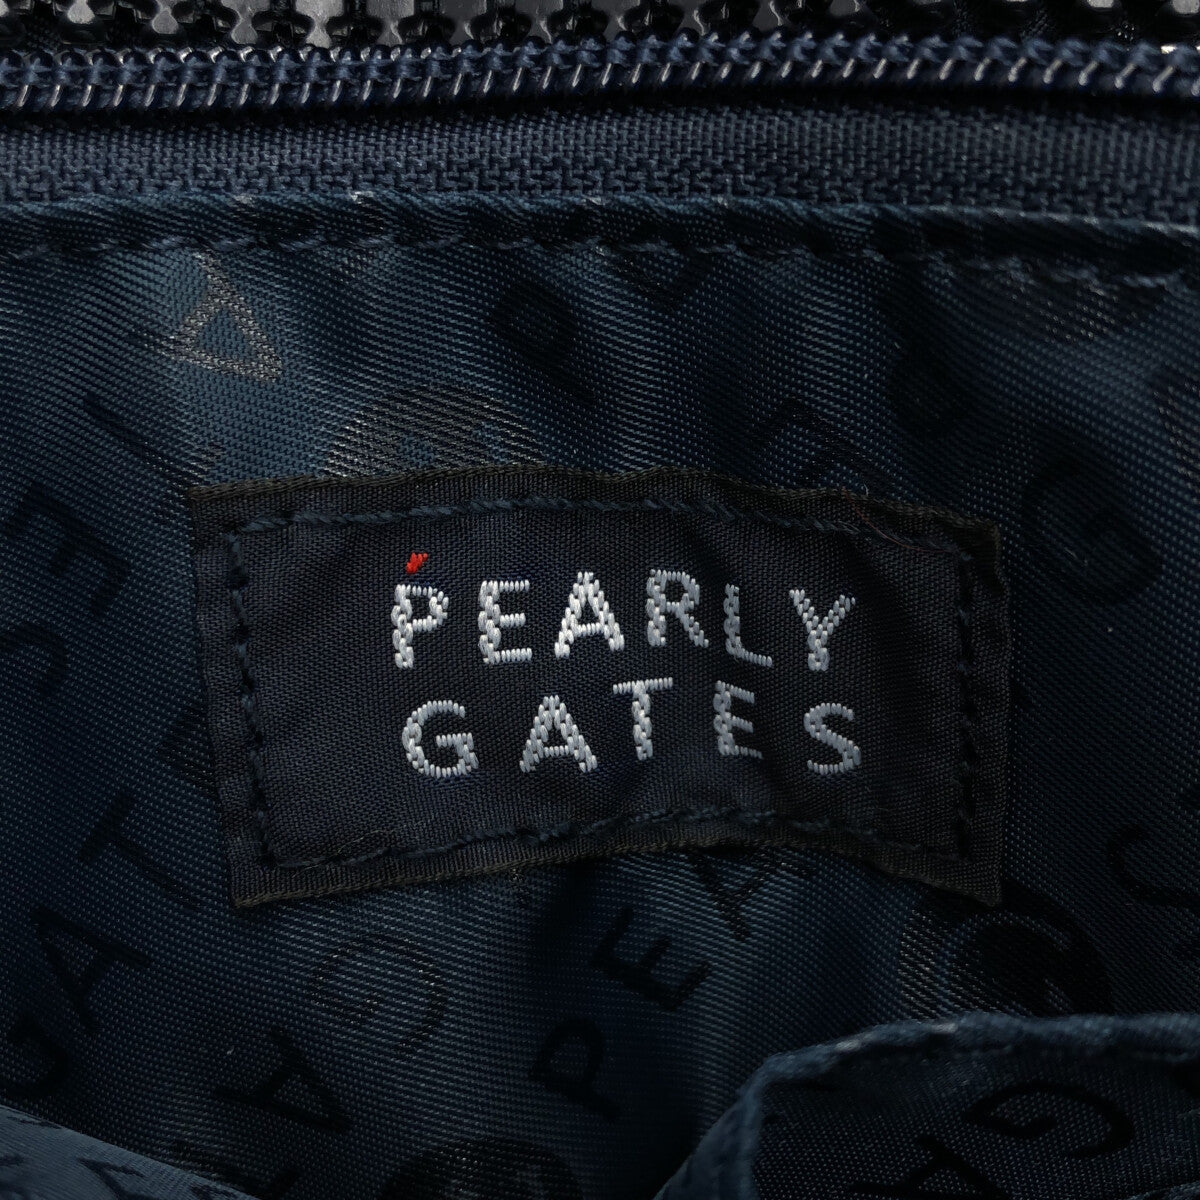 PEARLY GATES / パーリーゲイツ | フリンジハンドル カートバッグ ...